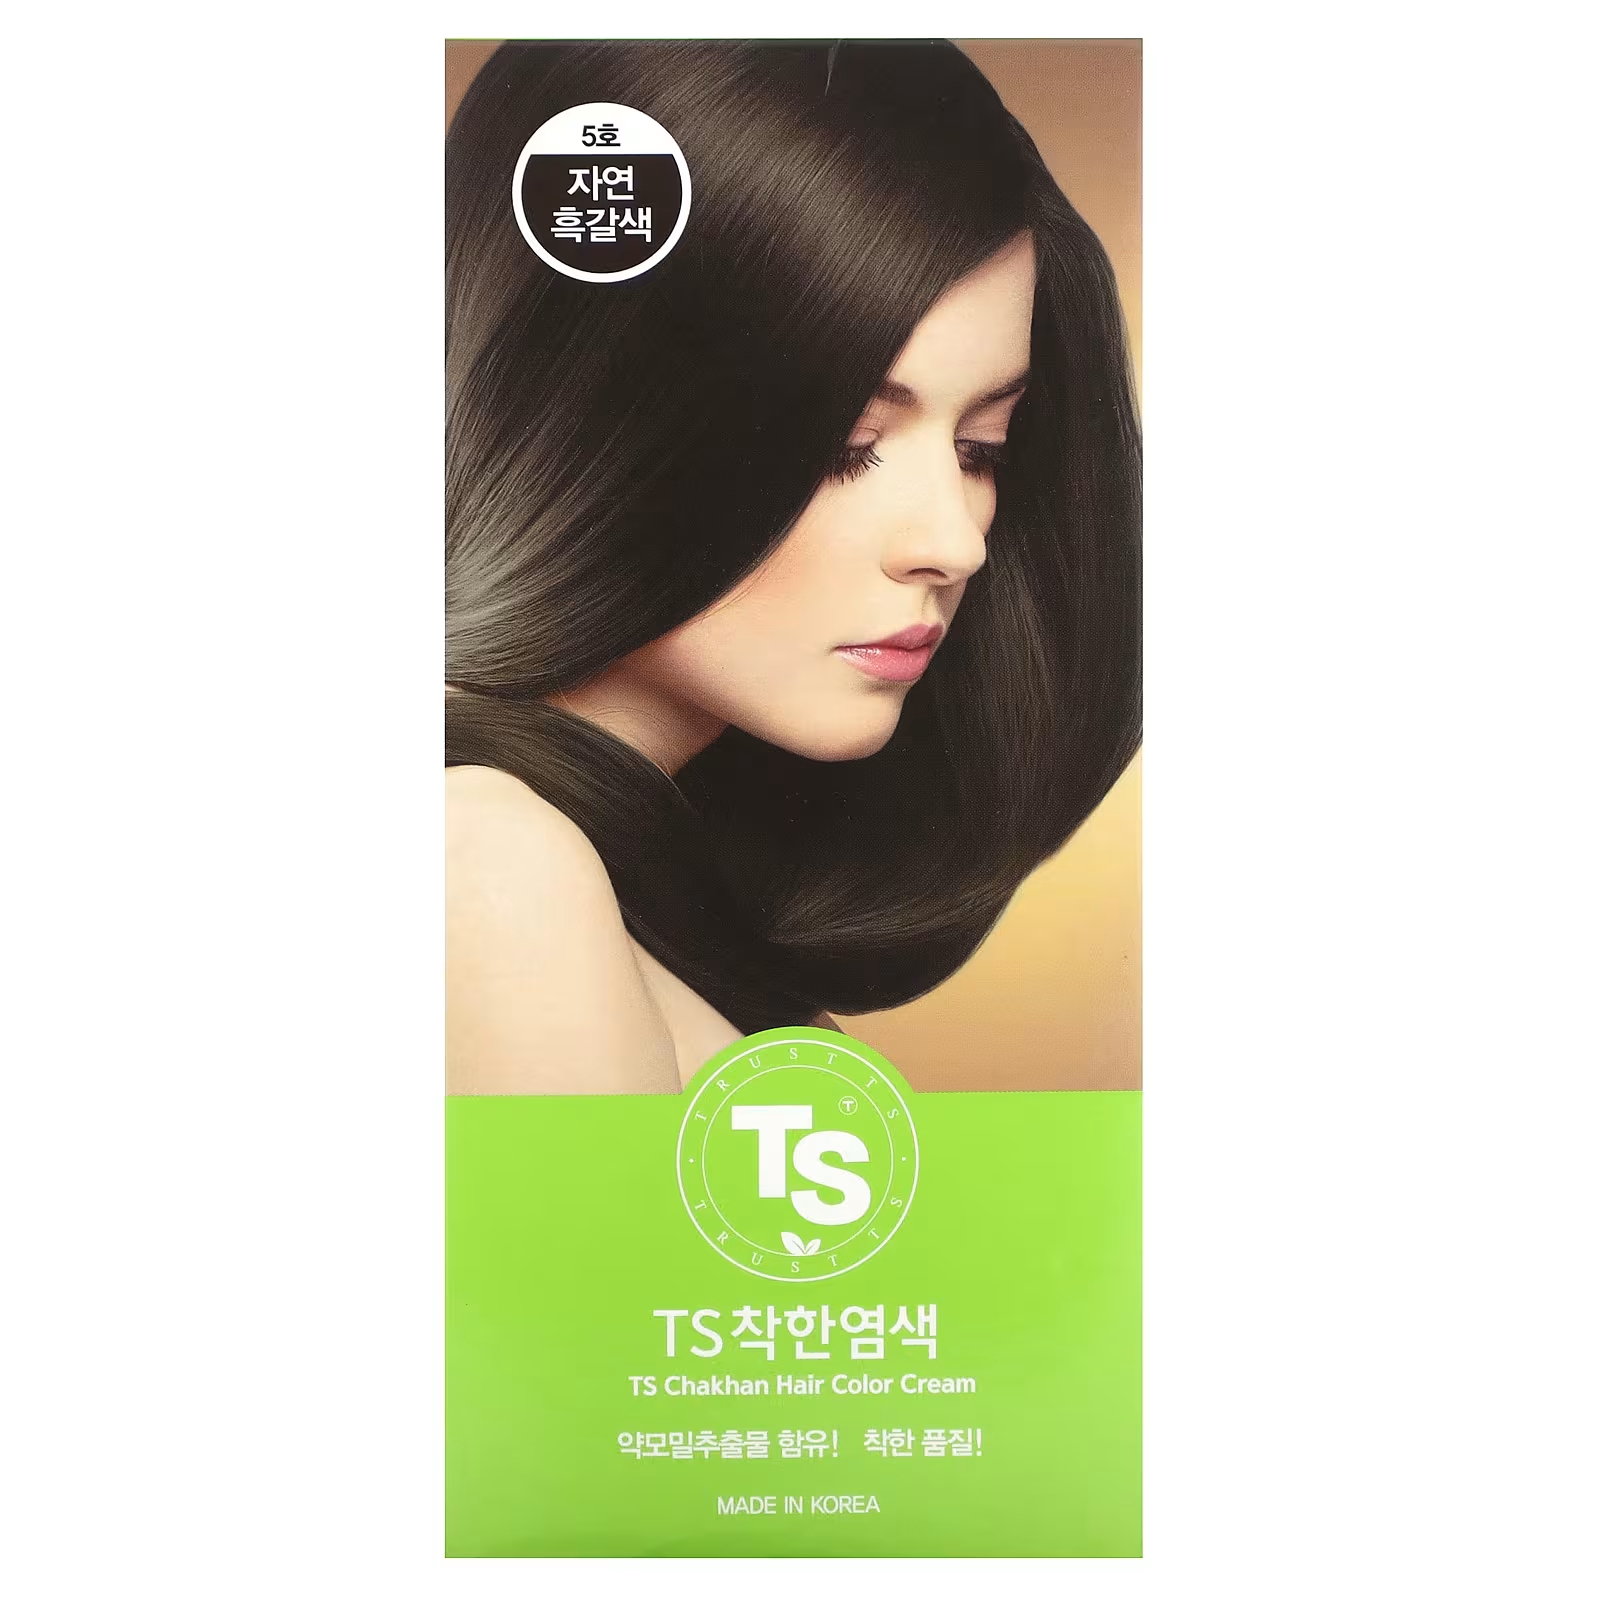 TS Trillion Крем-краска для волос Чахан №5 темно-коричневый набор из 7 предметов ts trillion ts chakan крем краска для волос 8 желто коричневый 1 комплект